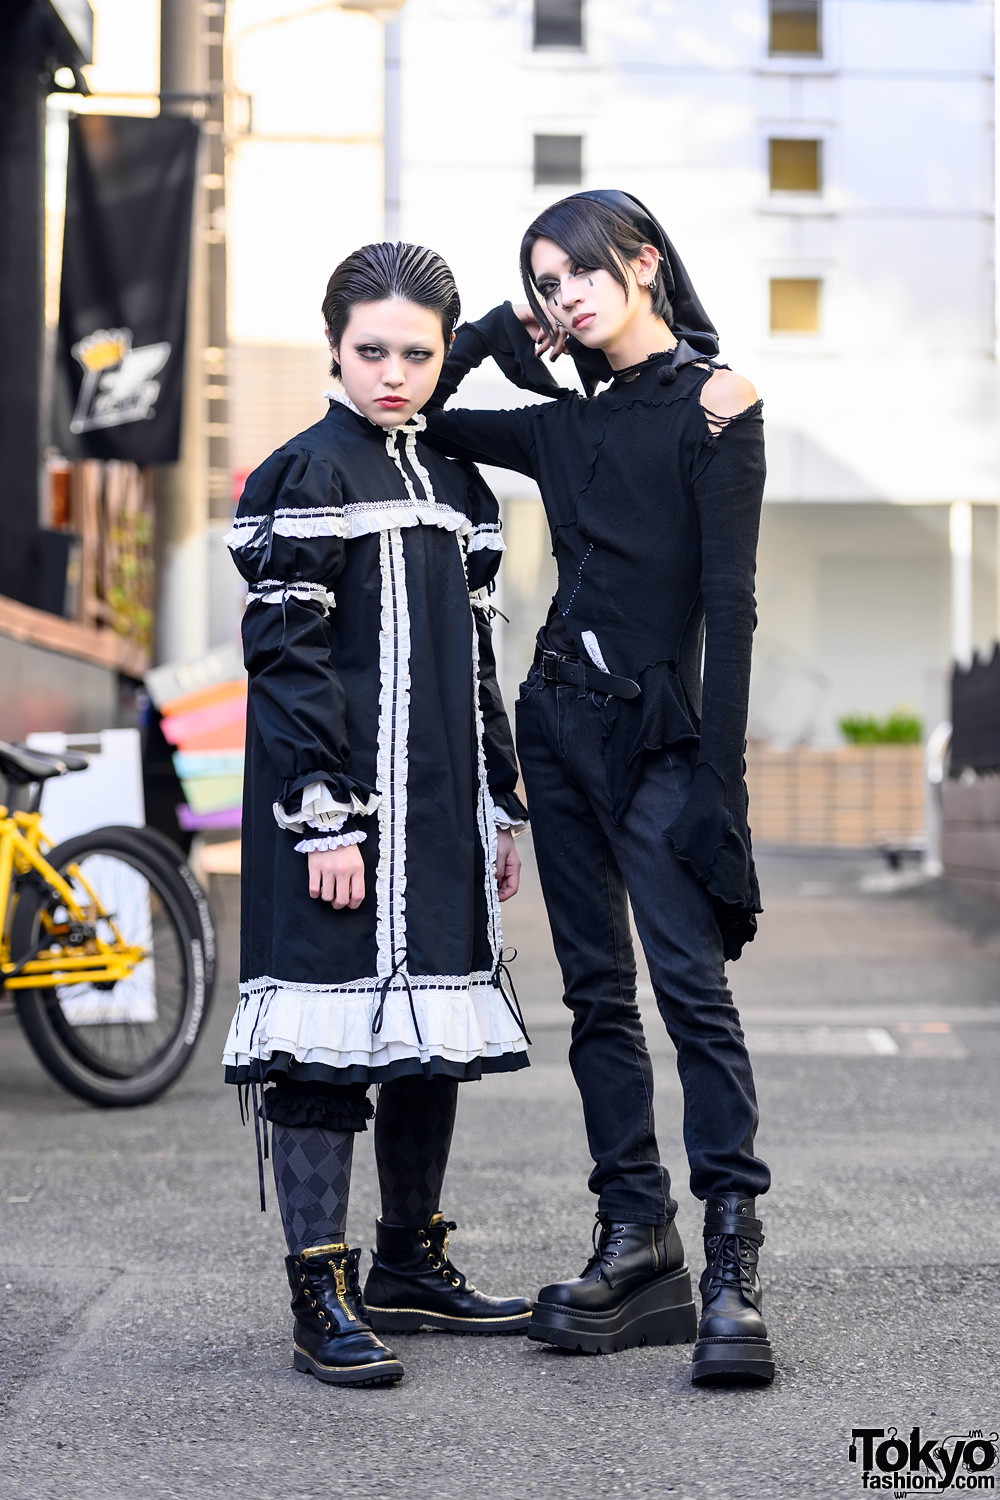 Gothic / Goth – My Kind of Japan